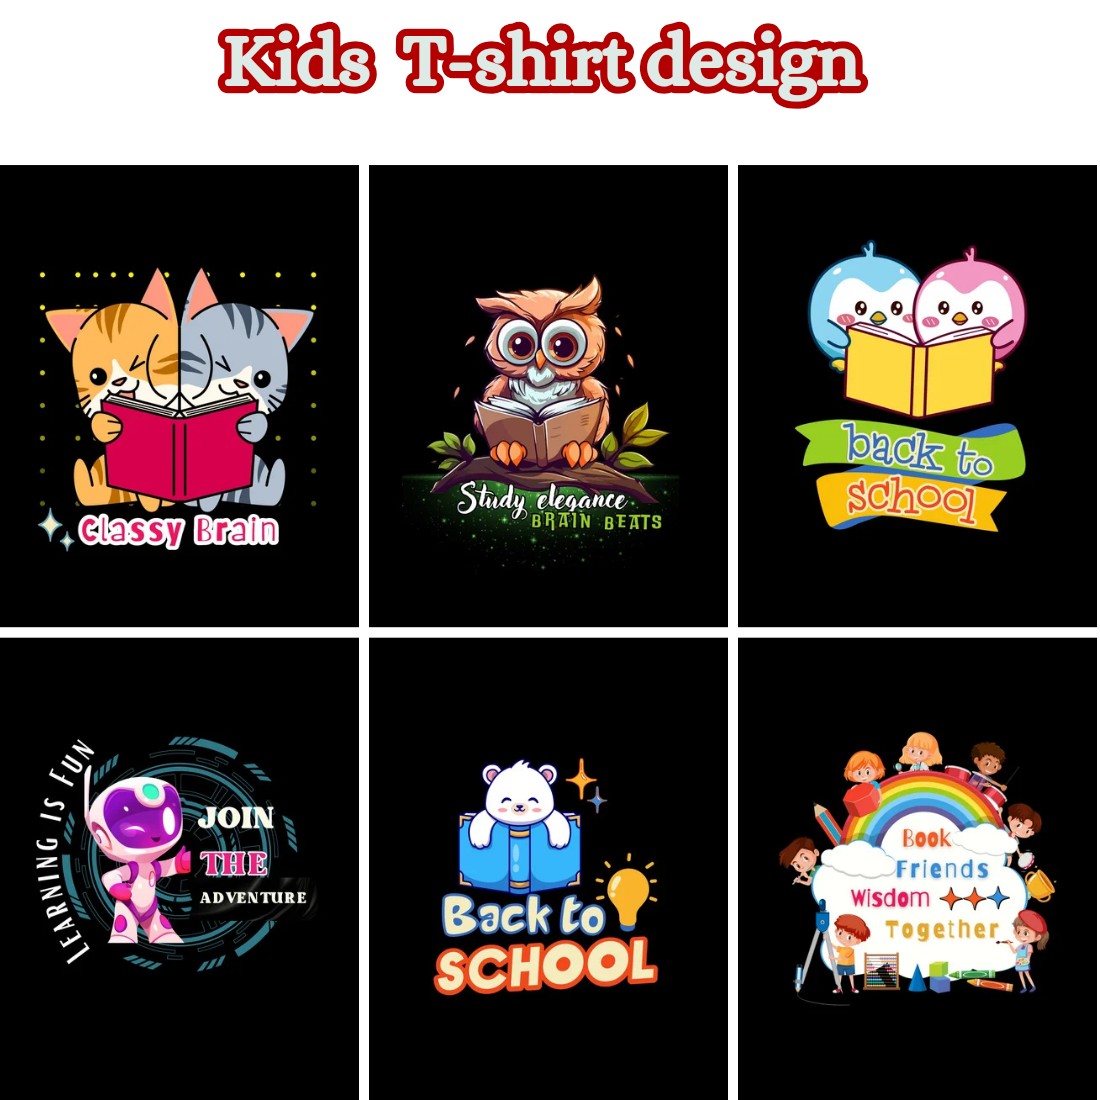 25 kids tshirt design png file cover image.